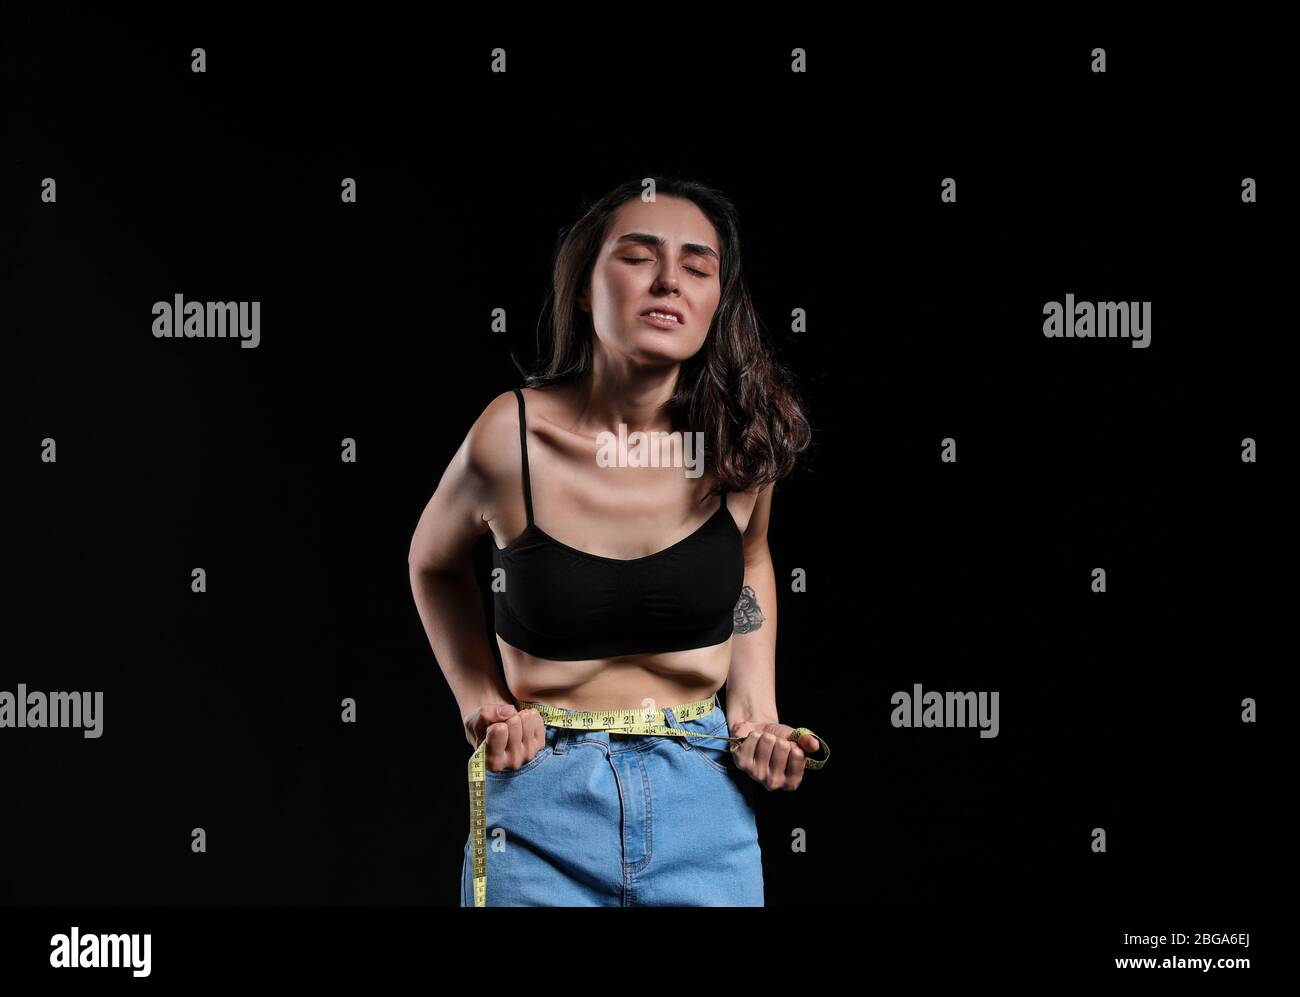 Sick woman measuring her waist on dark background. Concept of